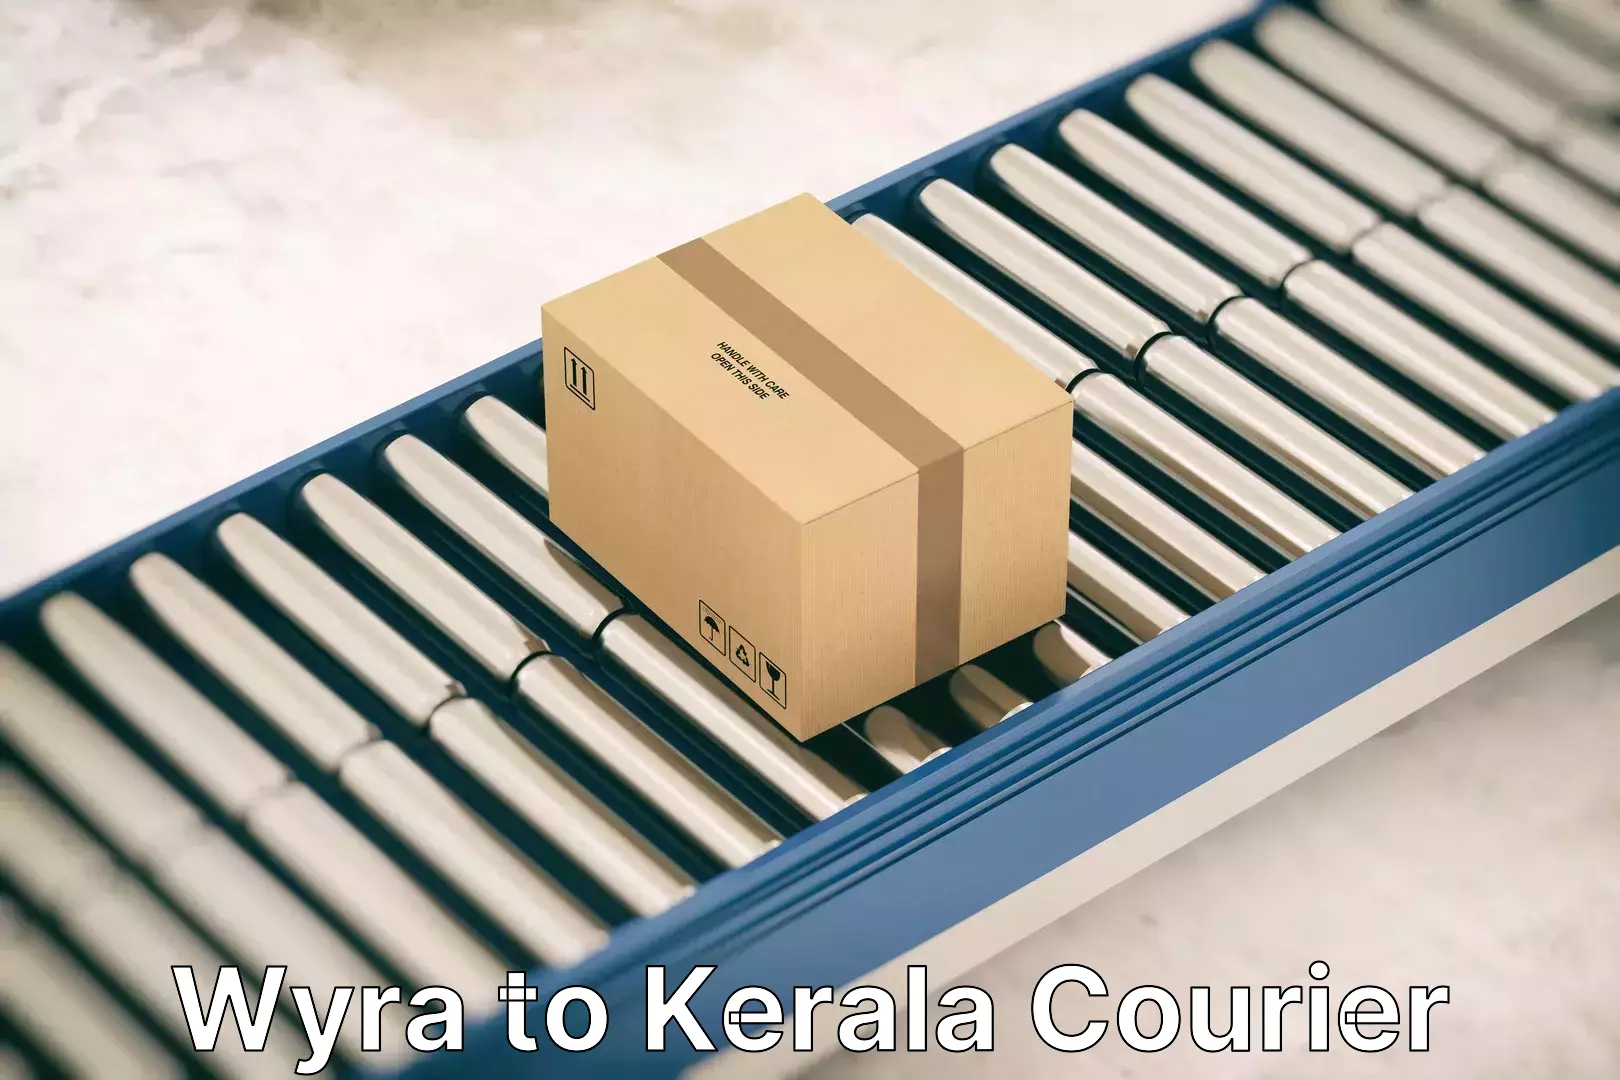 Furniture transport company Wyra to Kerala